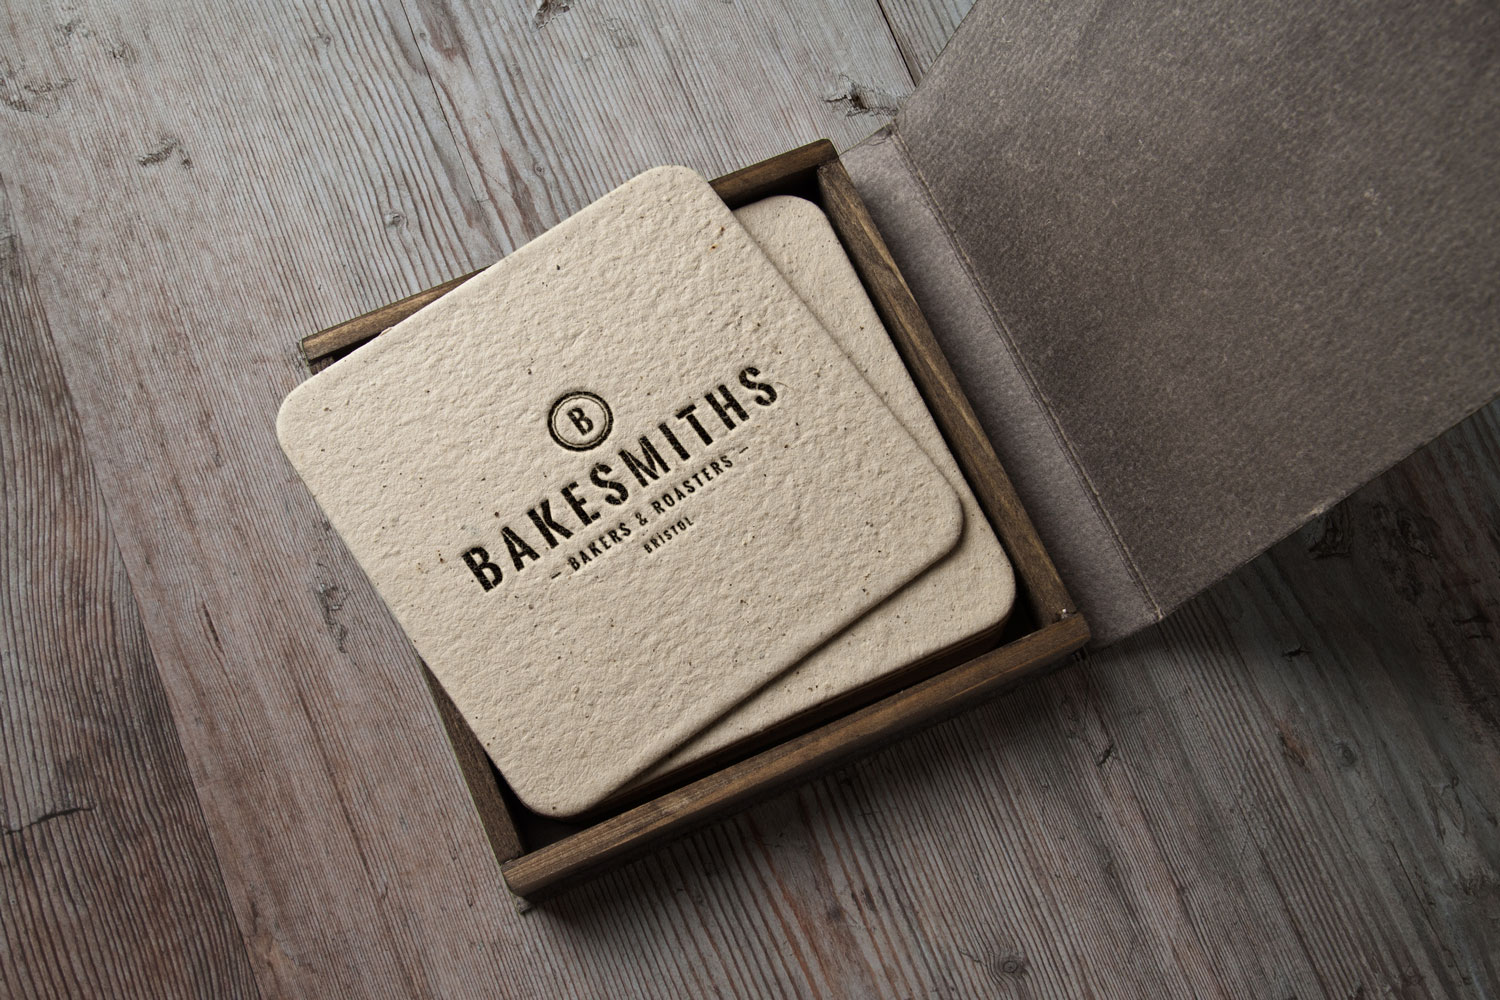 Bakesmiths-Coffee-Shop-Branding-Cup-Coaster-by-Get-it-Sorted.jpg